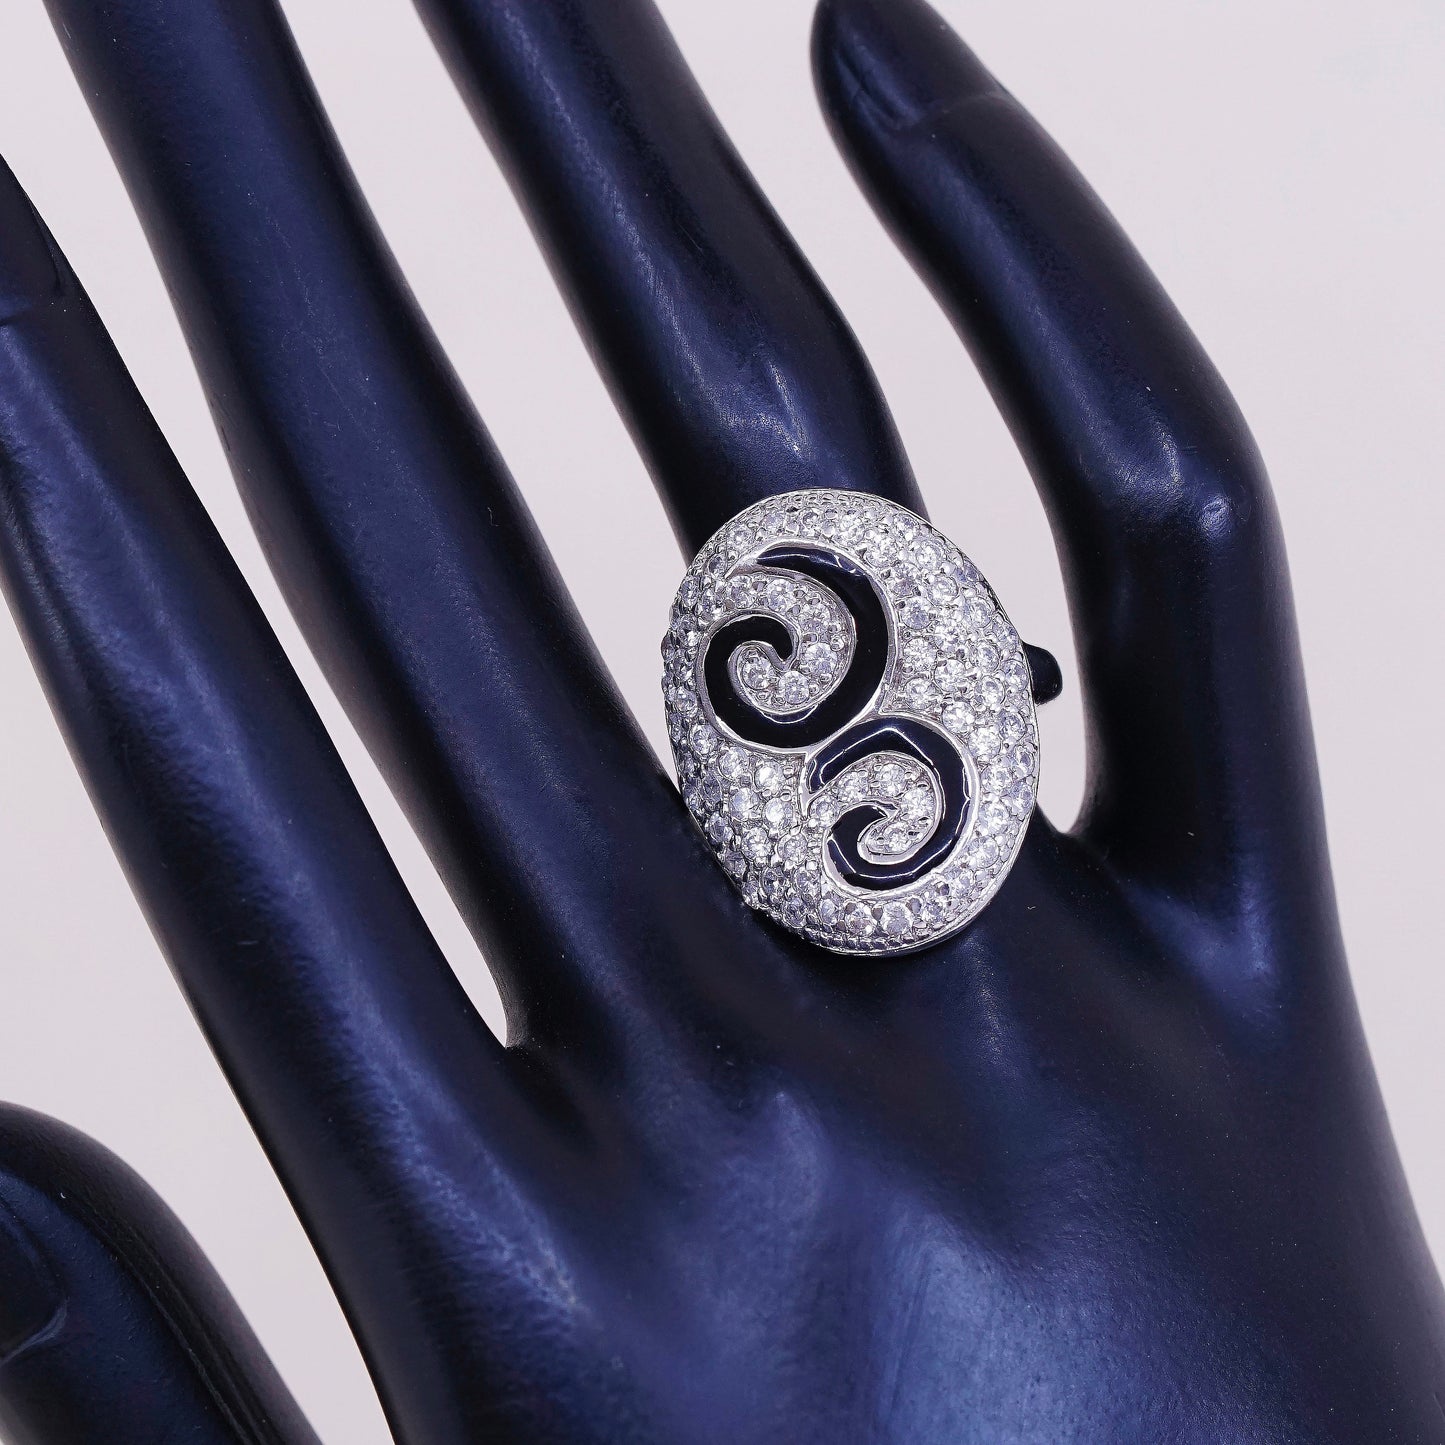 sz 7.5 vtg Sterling silver engagement ring, 925 w/ cluster Cz n enamel swirl